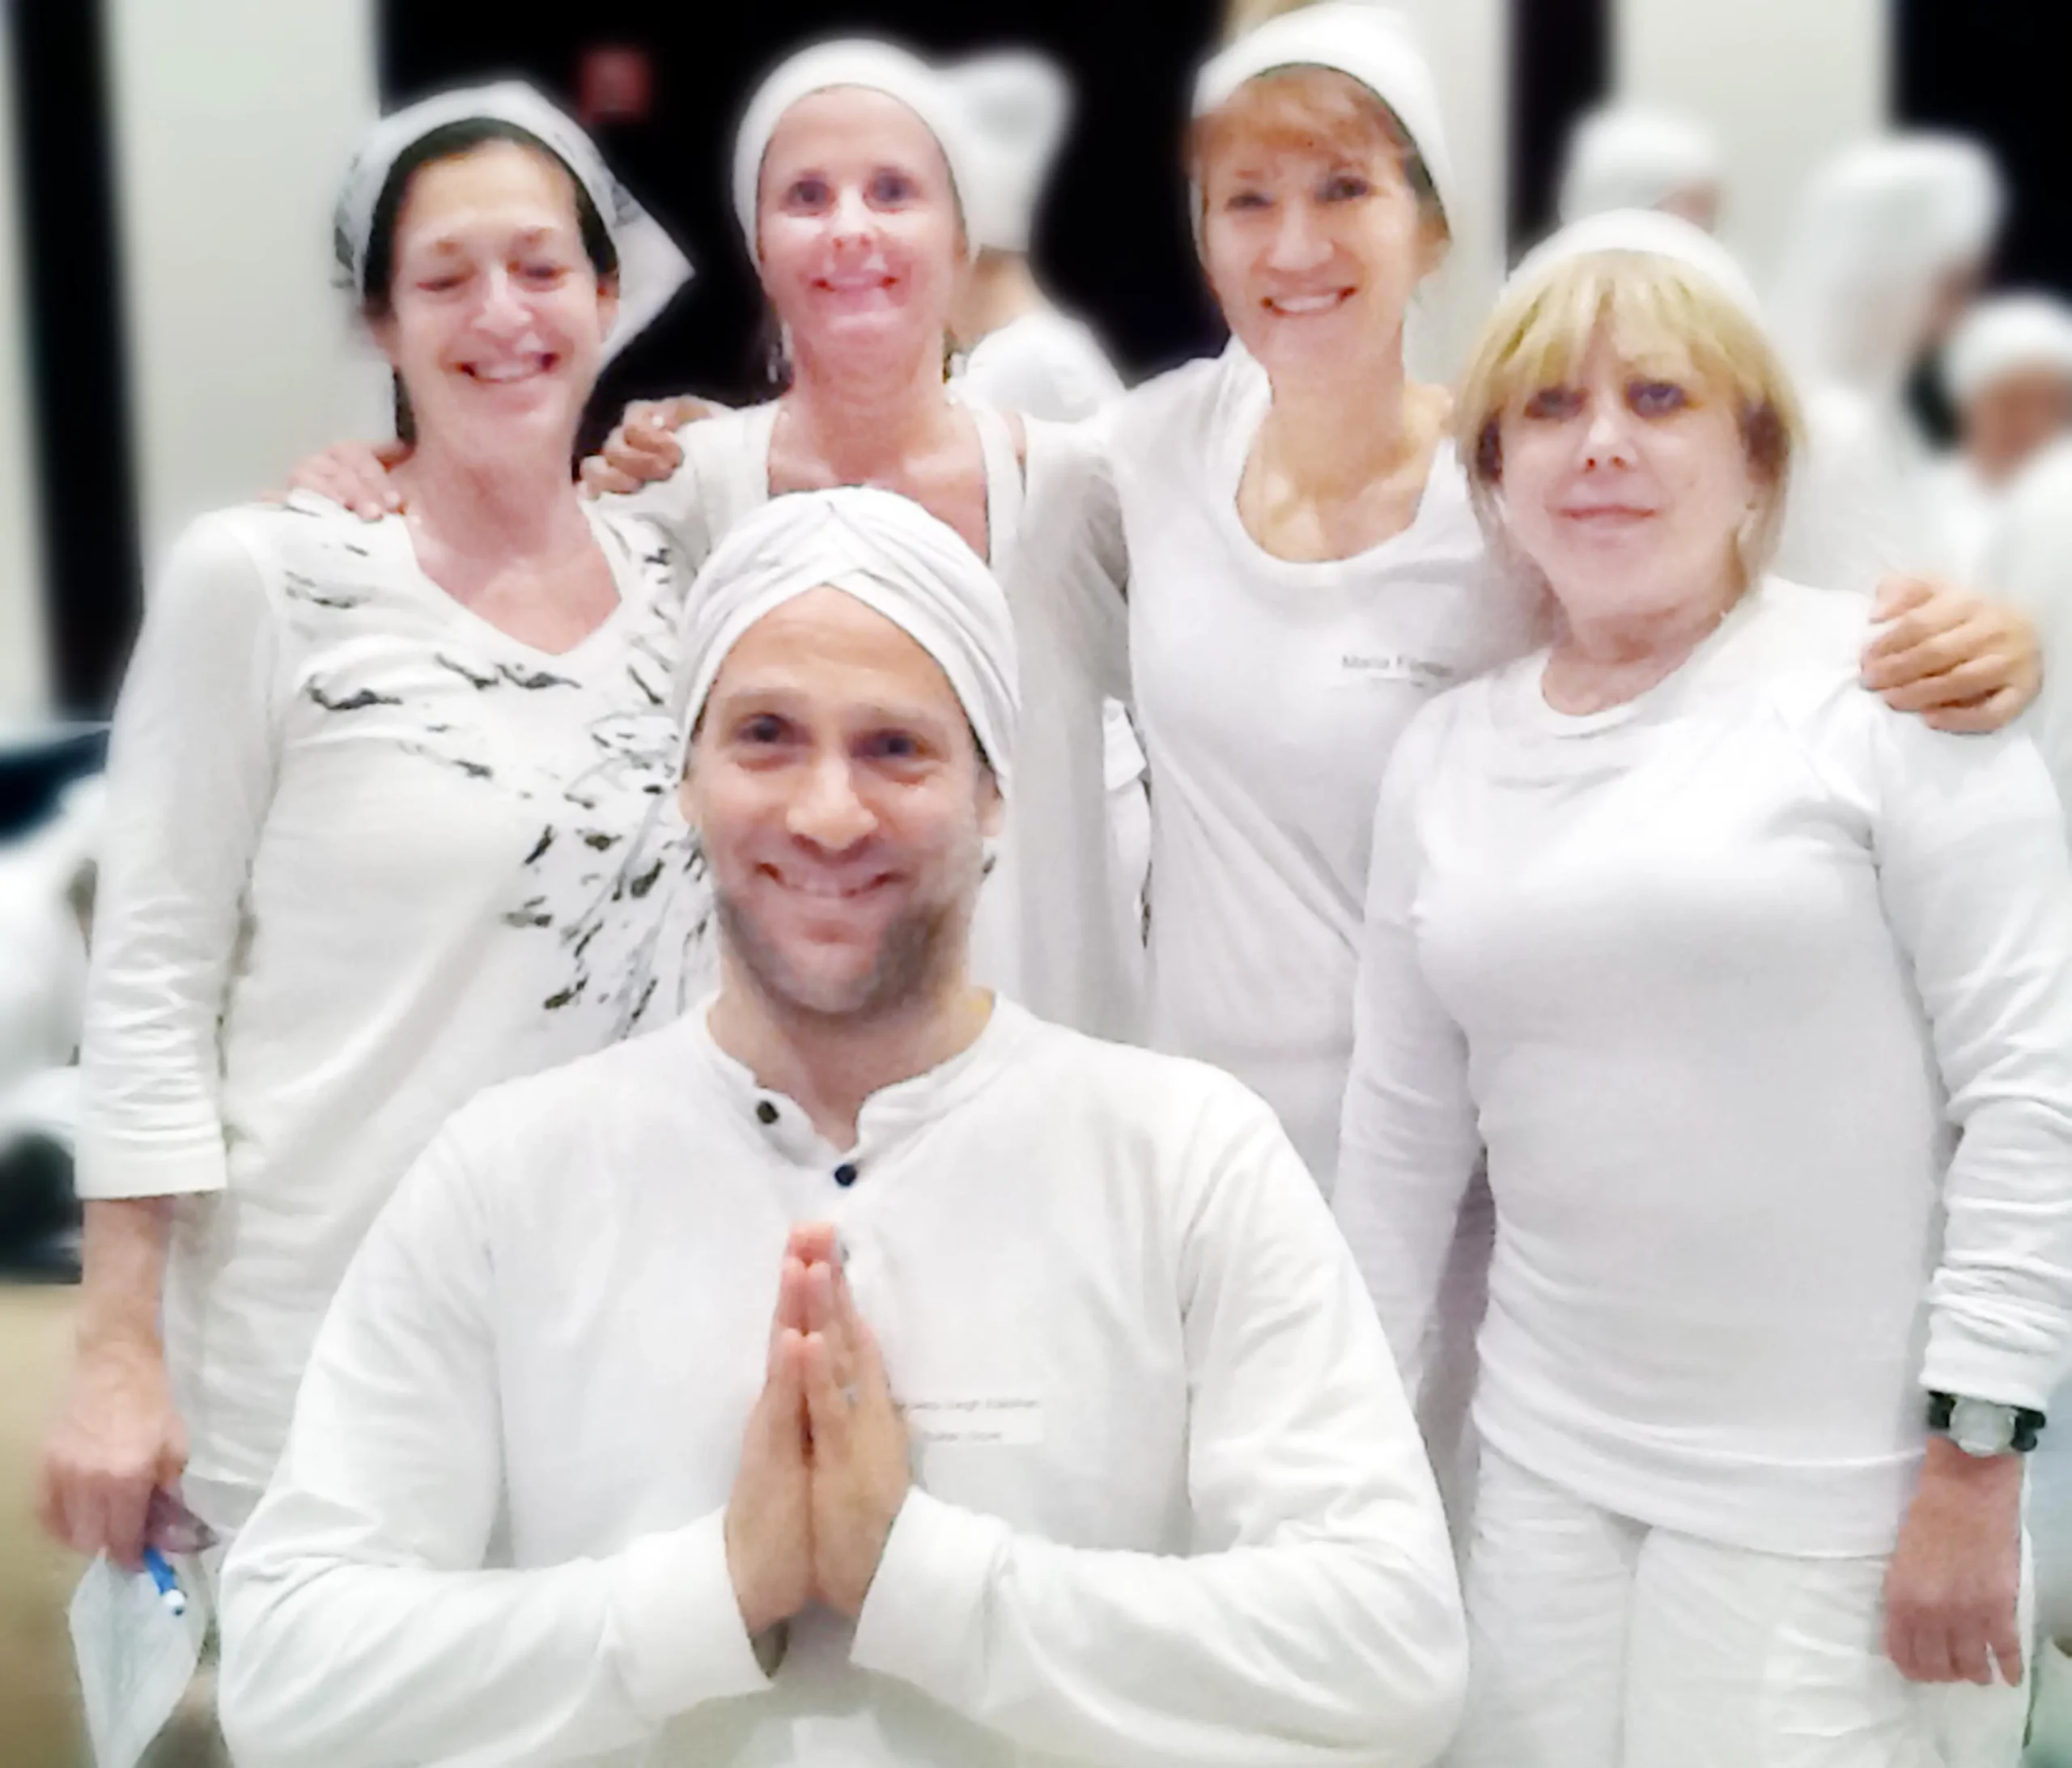 why do kundalini yoga wear white - Do you have to wear white in Kundalini